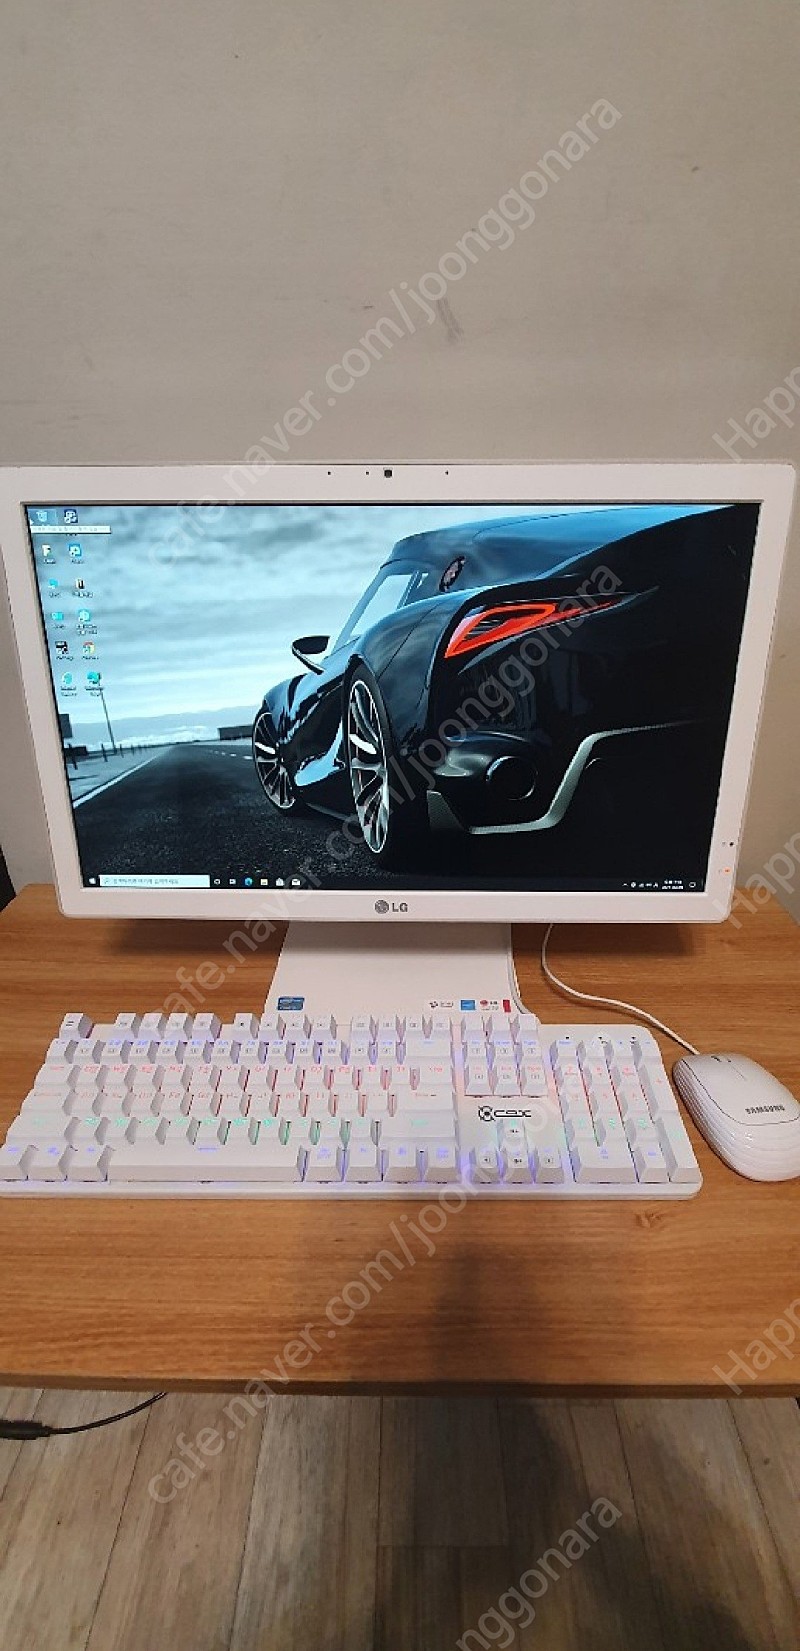 LG_ 일체형 올인원 PC 판매합니다(23 inch)